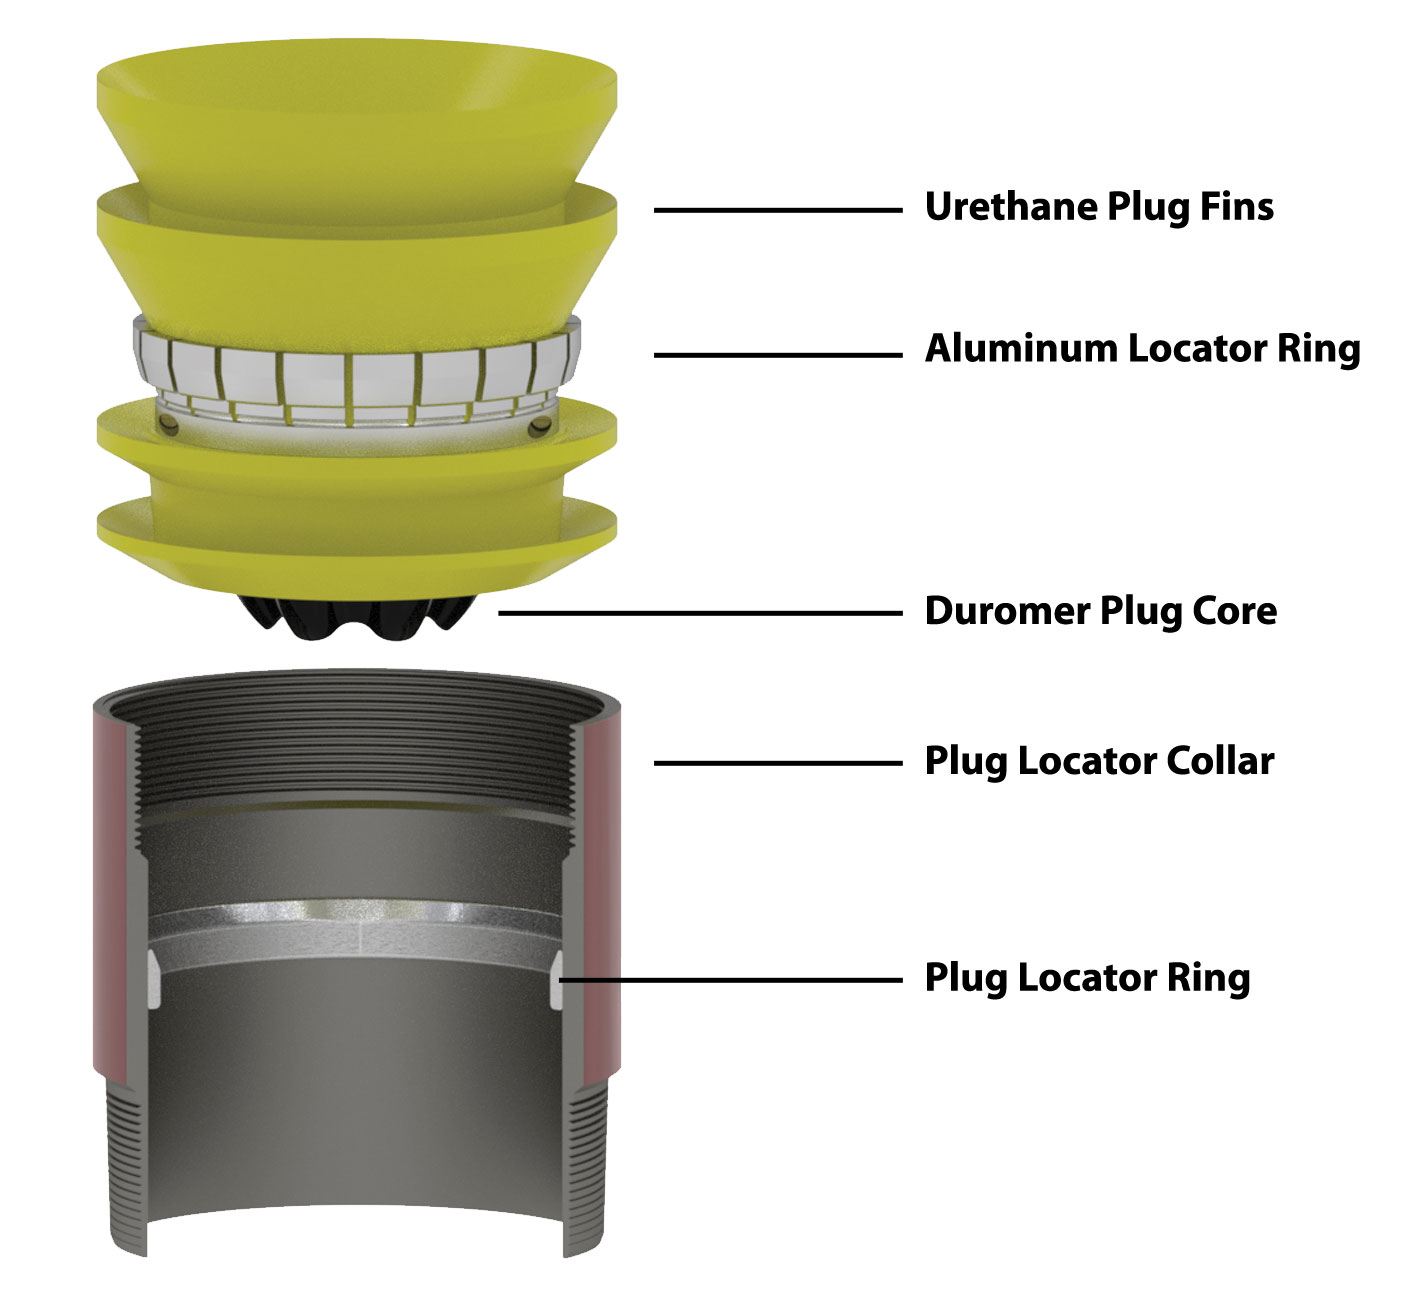 Plug locator system mitigates cement plug displacement risks - Drilling